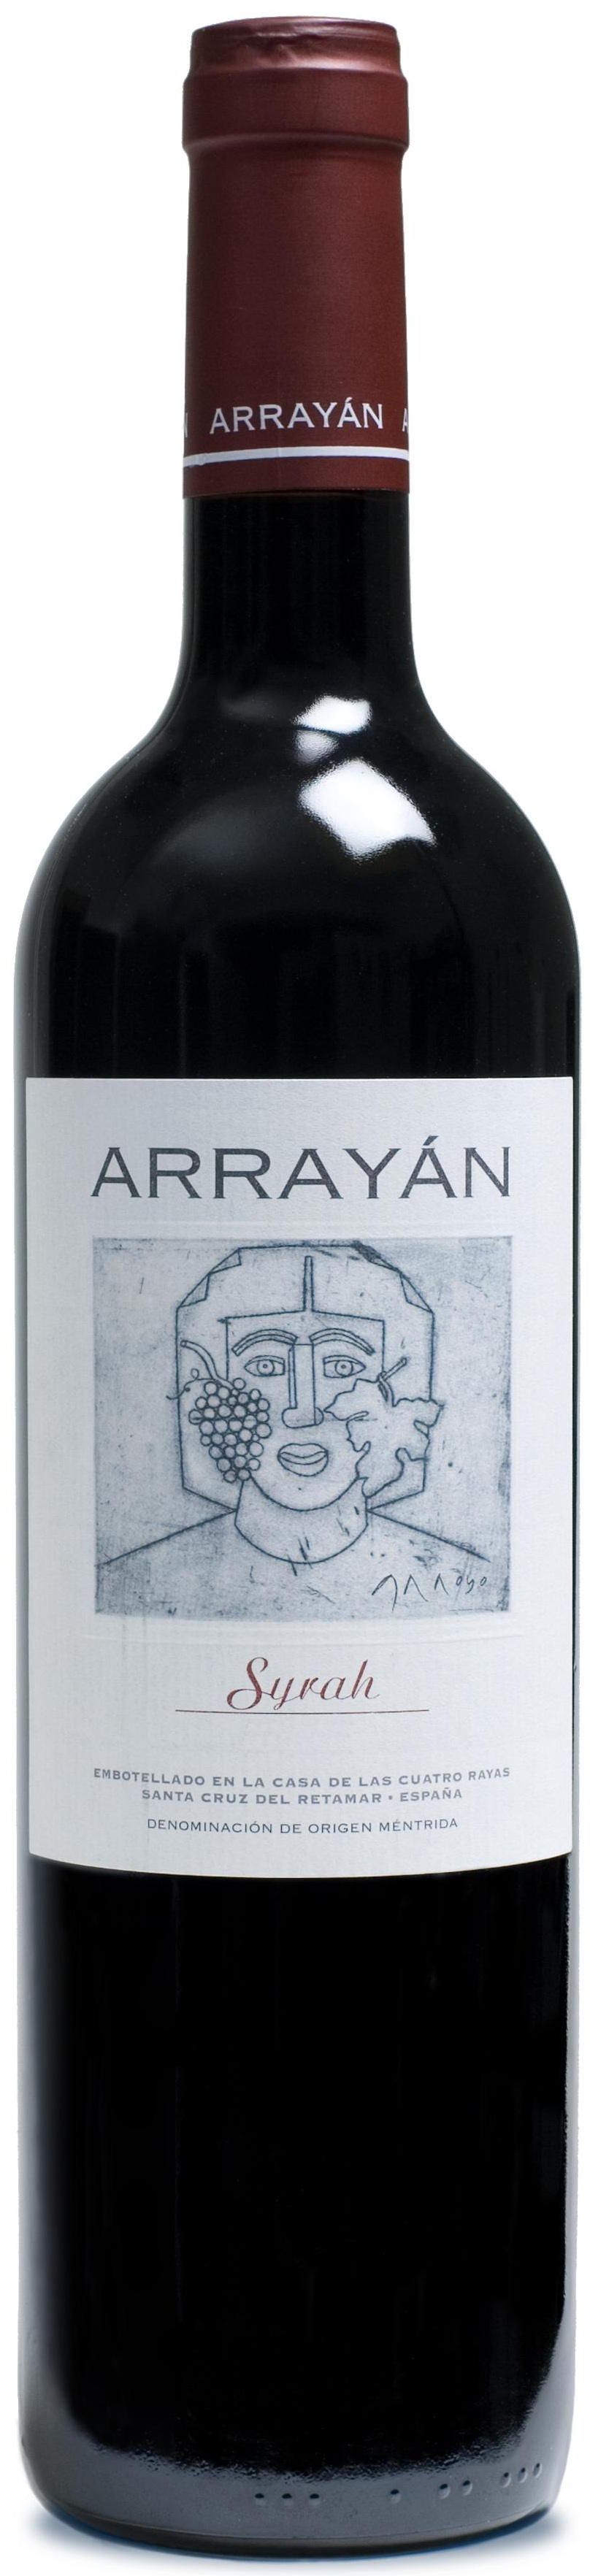 Image of Wine bottle Arrayán Syrah